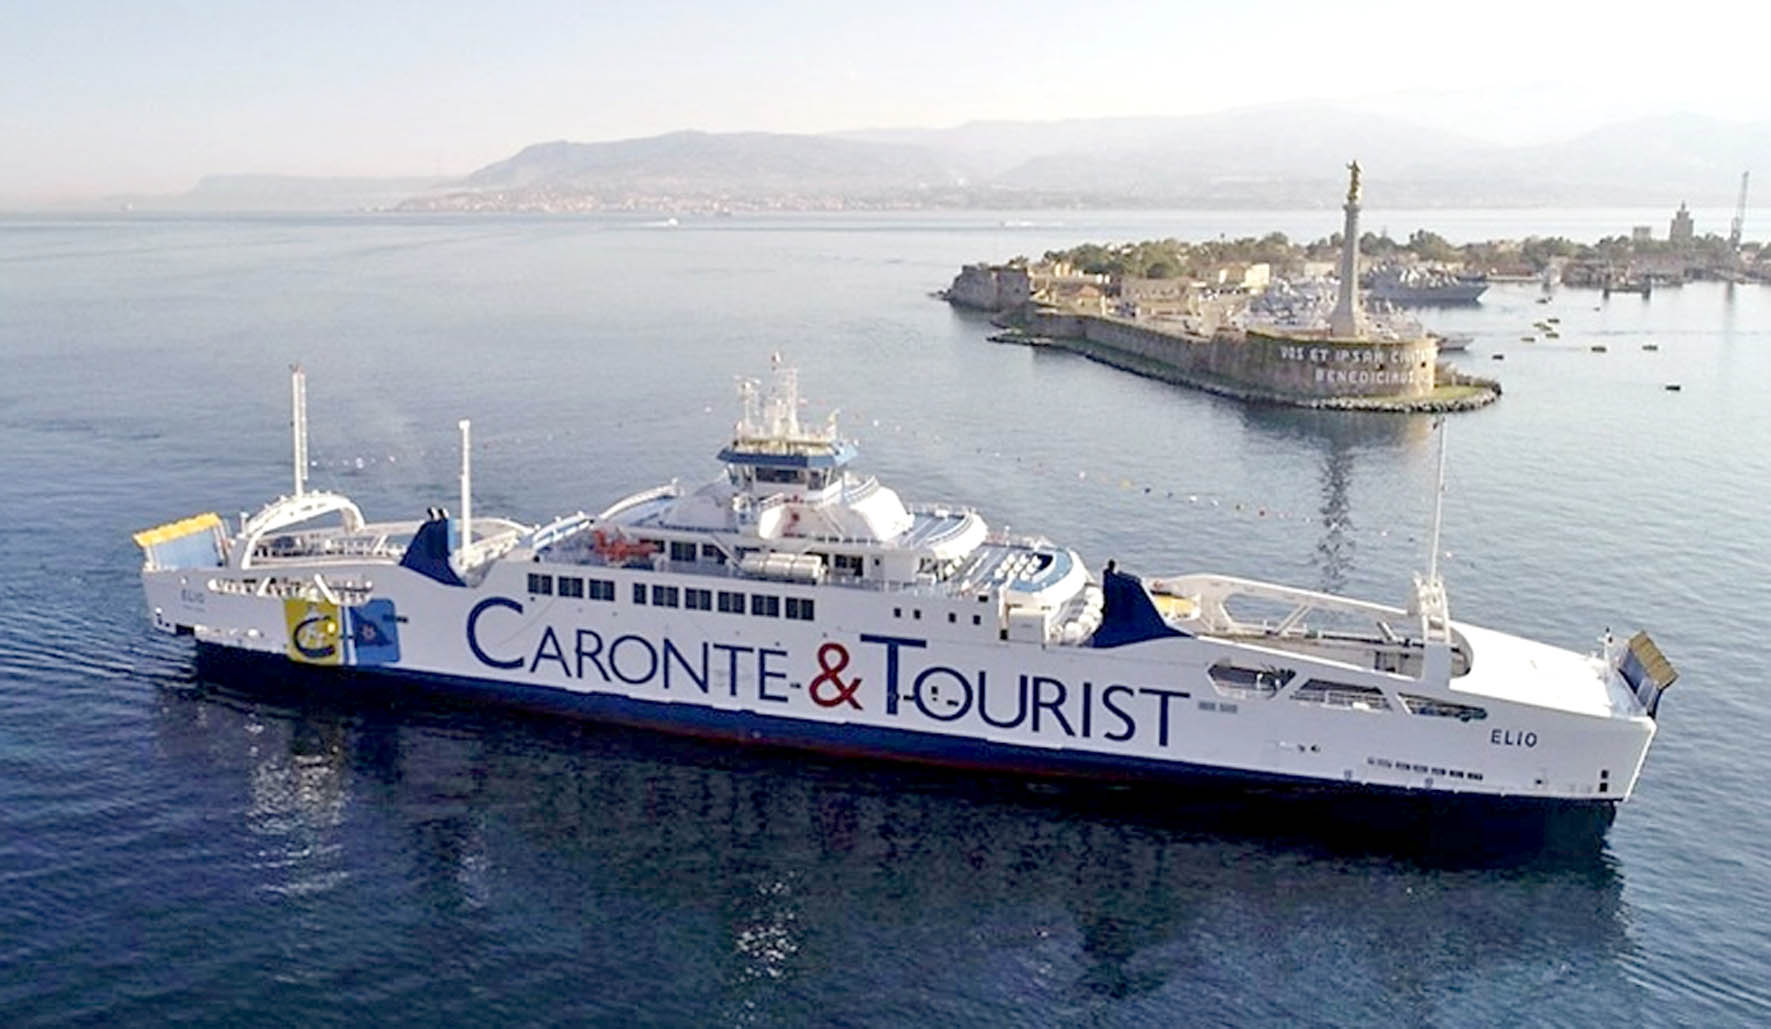 Caronte & Tourist ferries